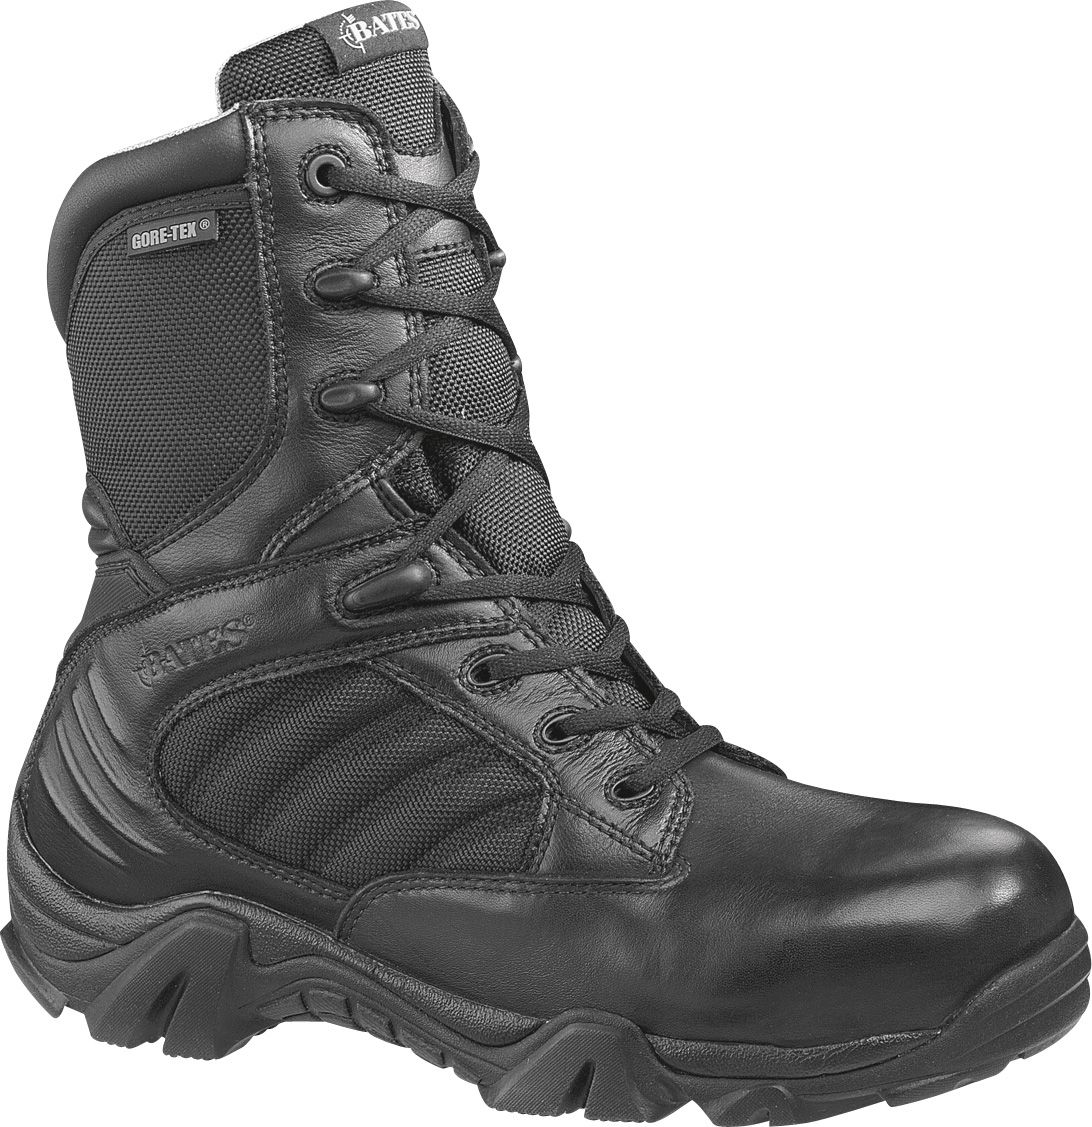 black composite toe tactical boots